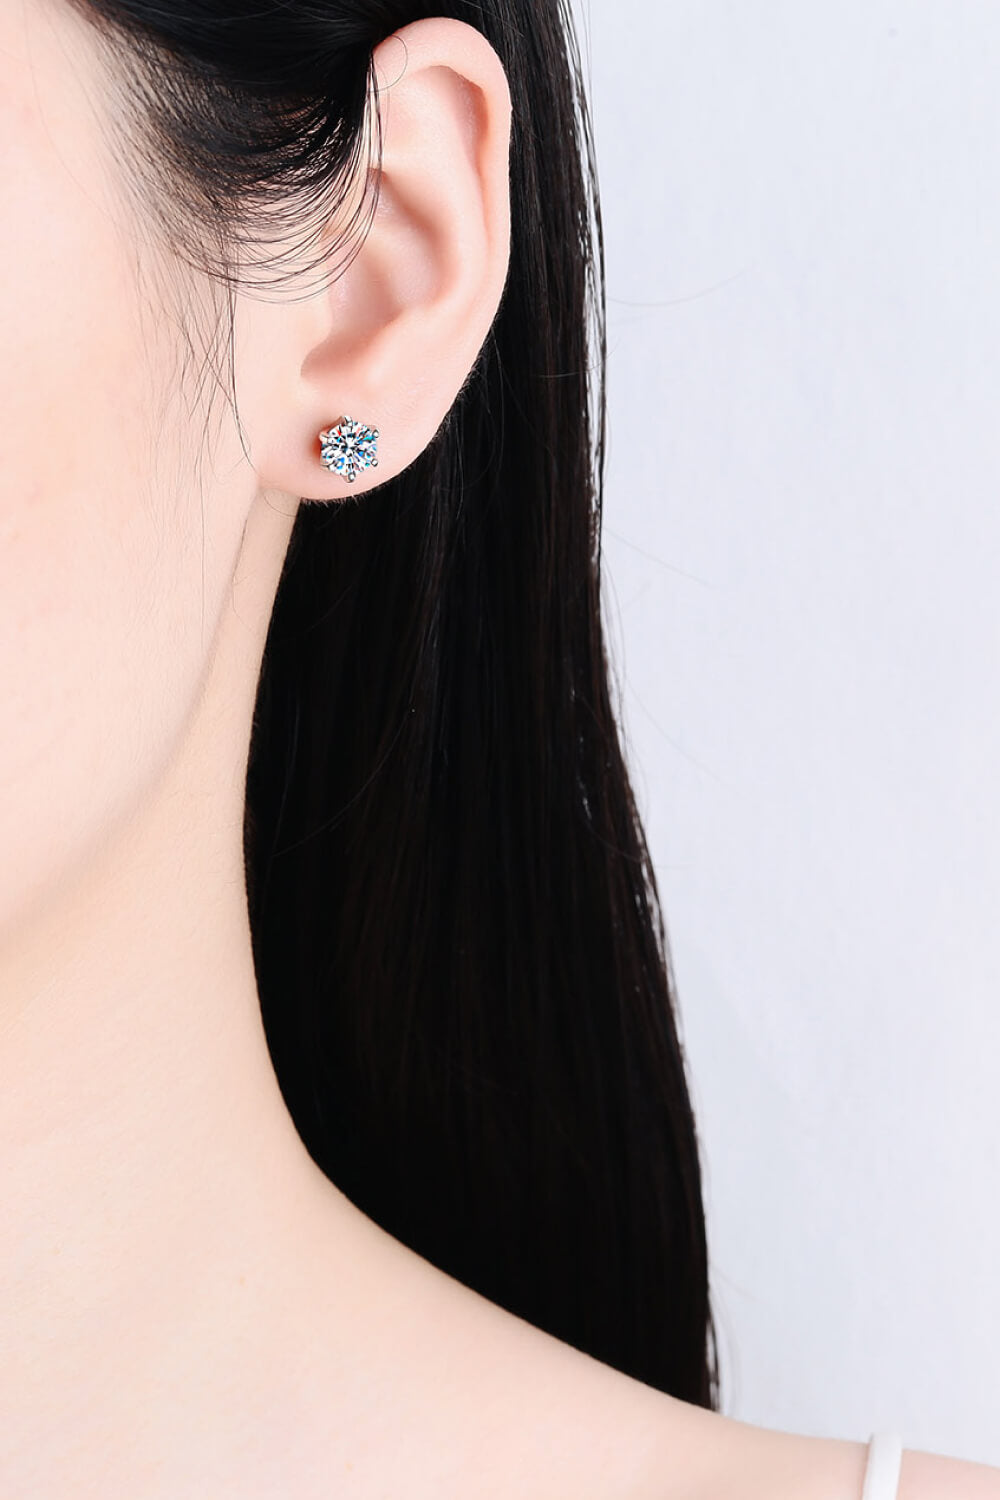 2 Carat Inlaid Moissanite Stud Earrings